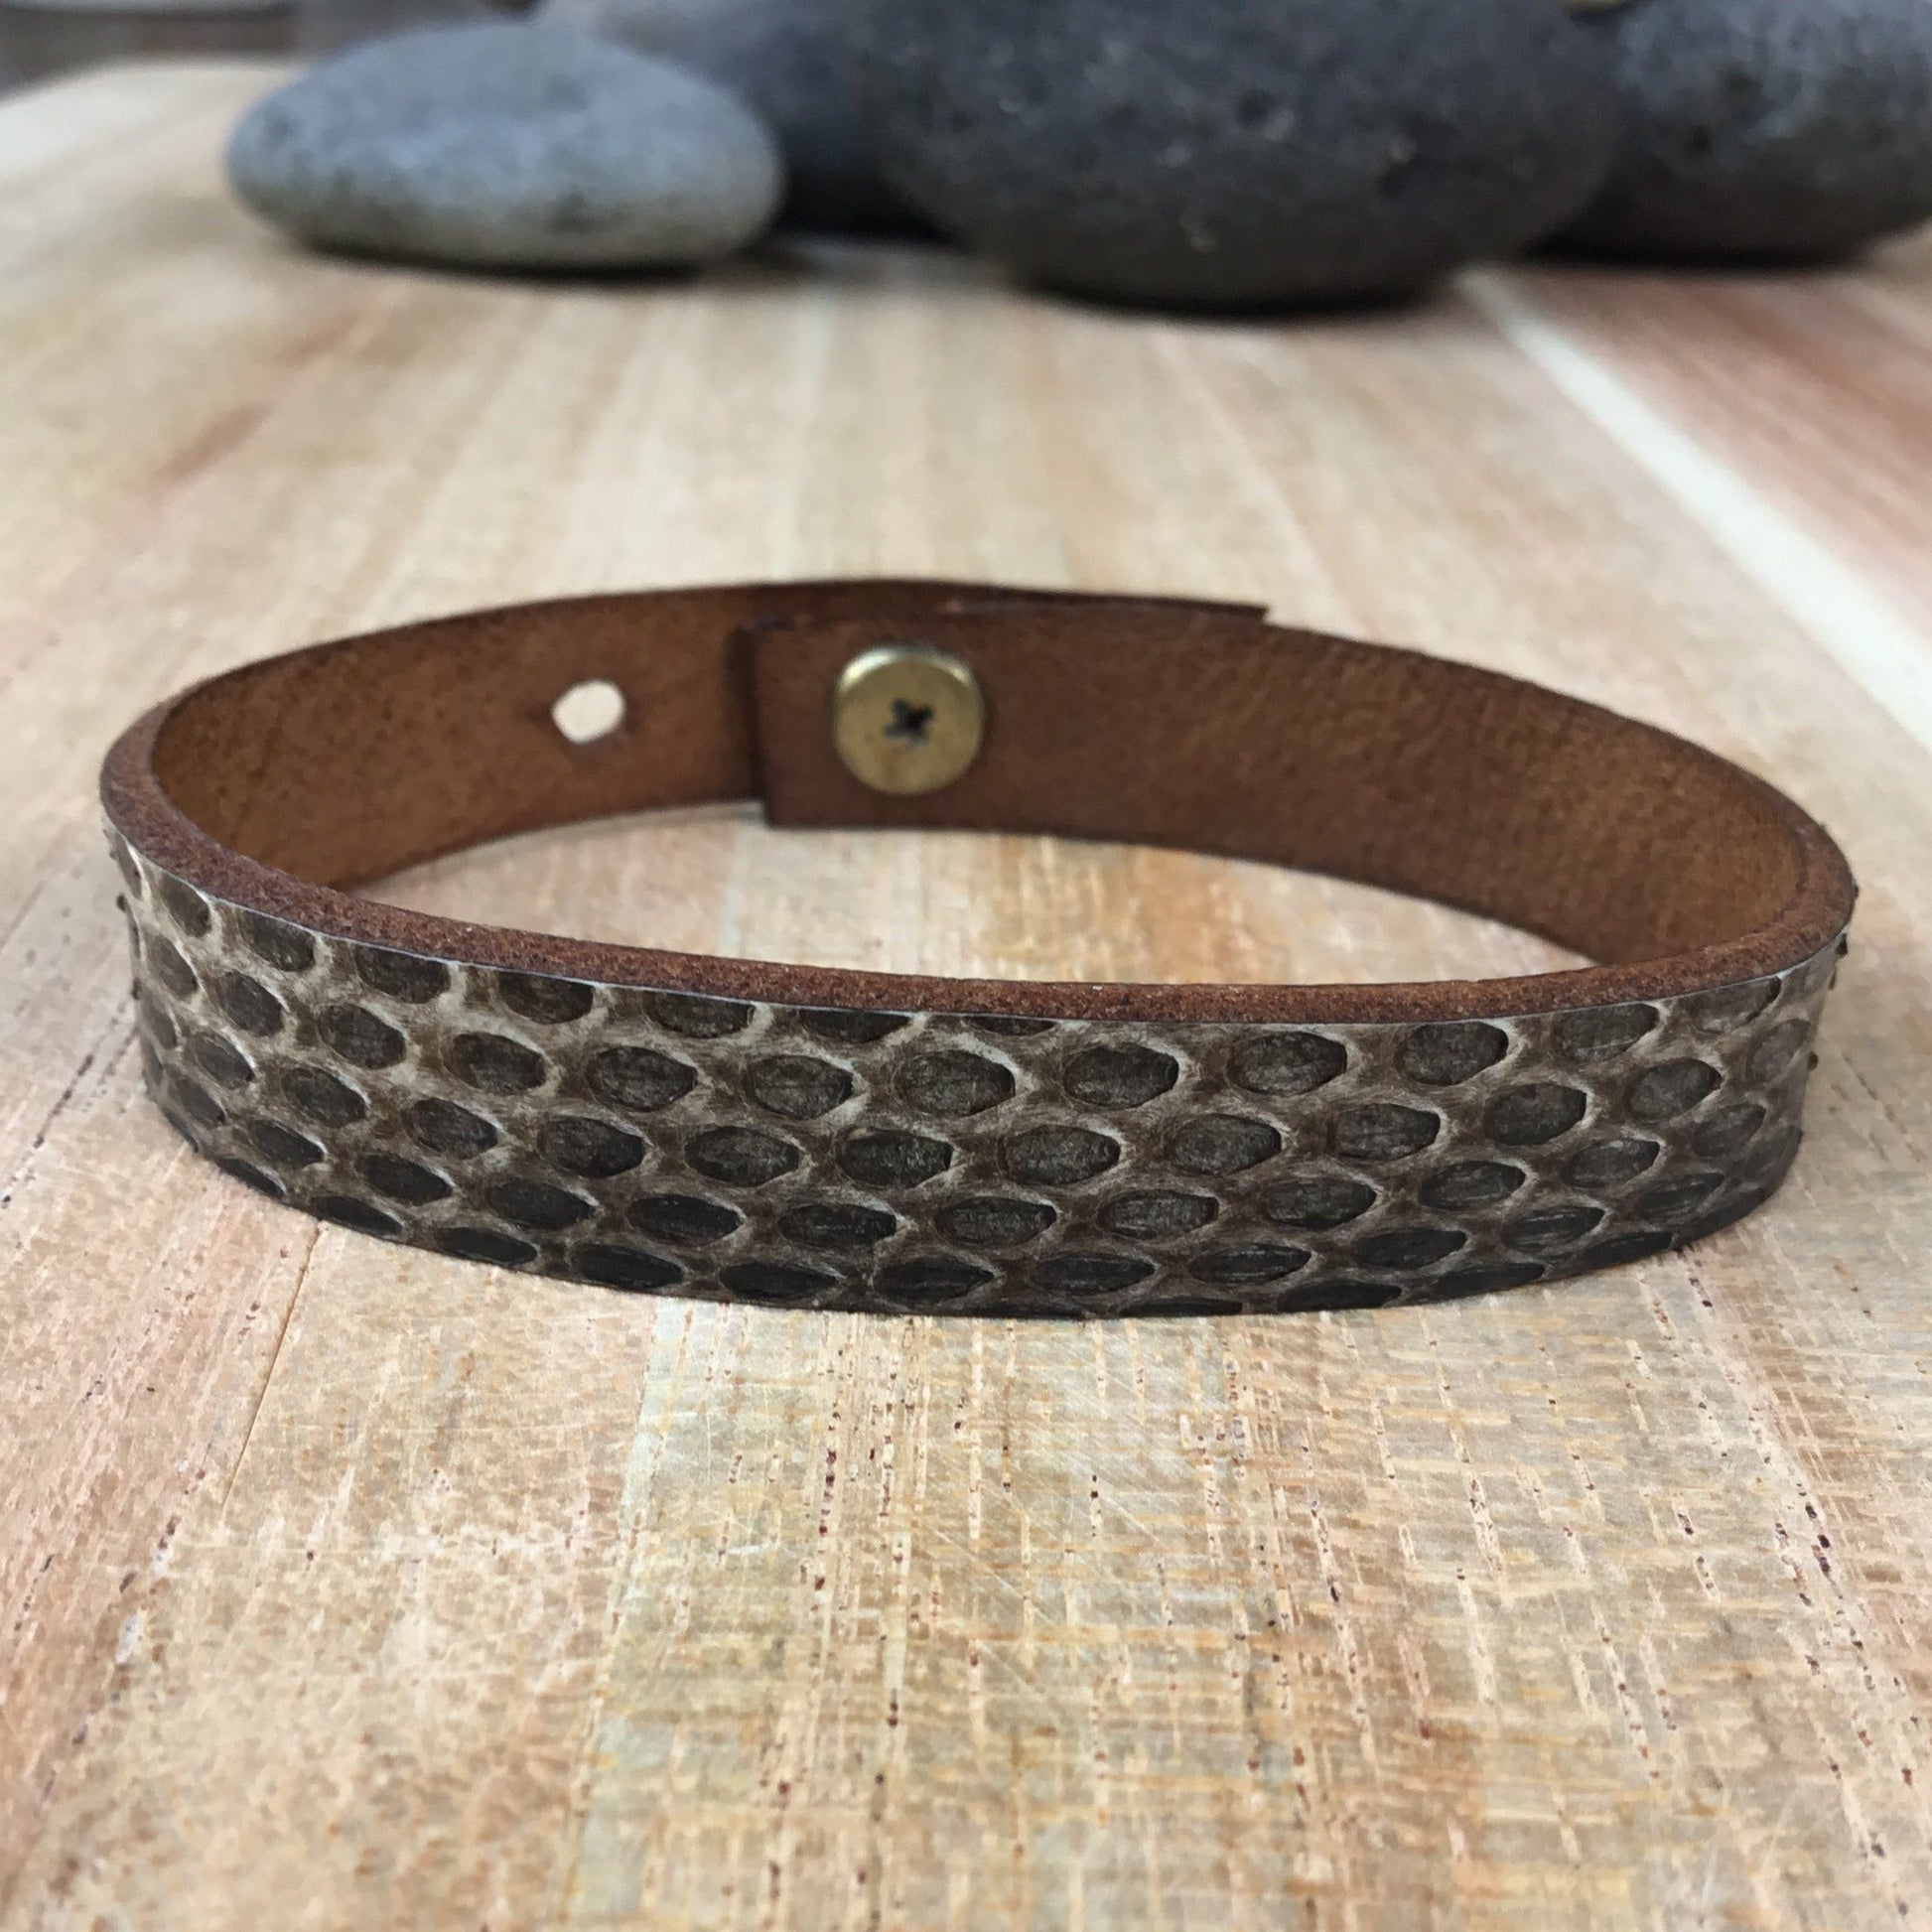 snakeskin bracelet, leather armband.